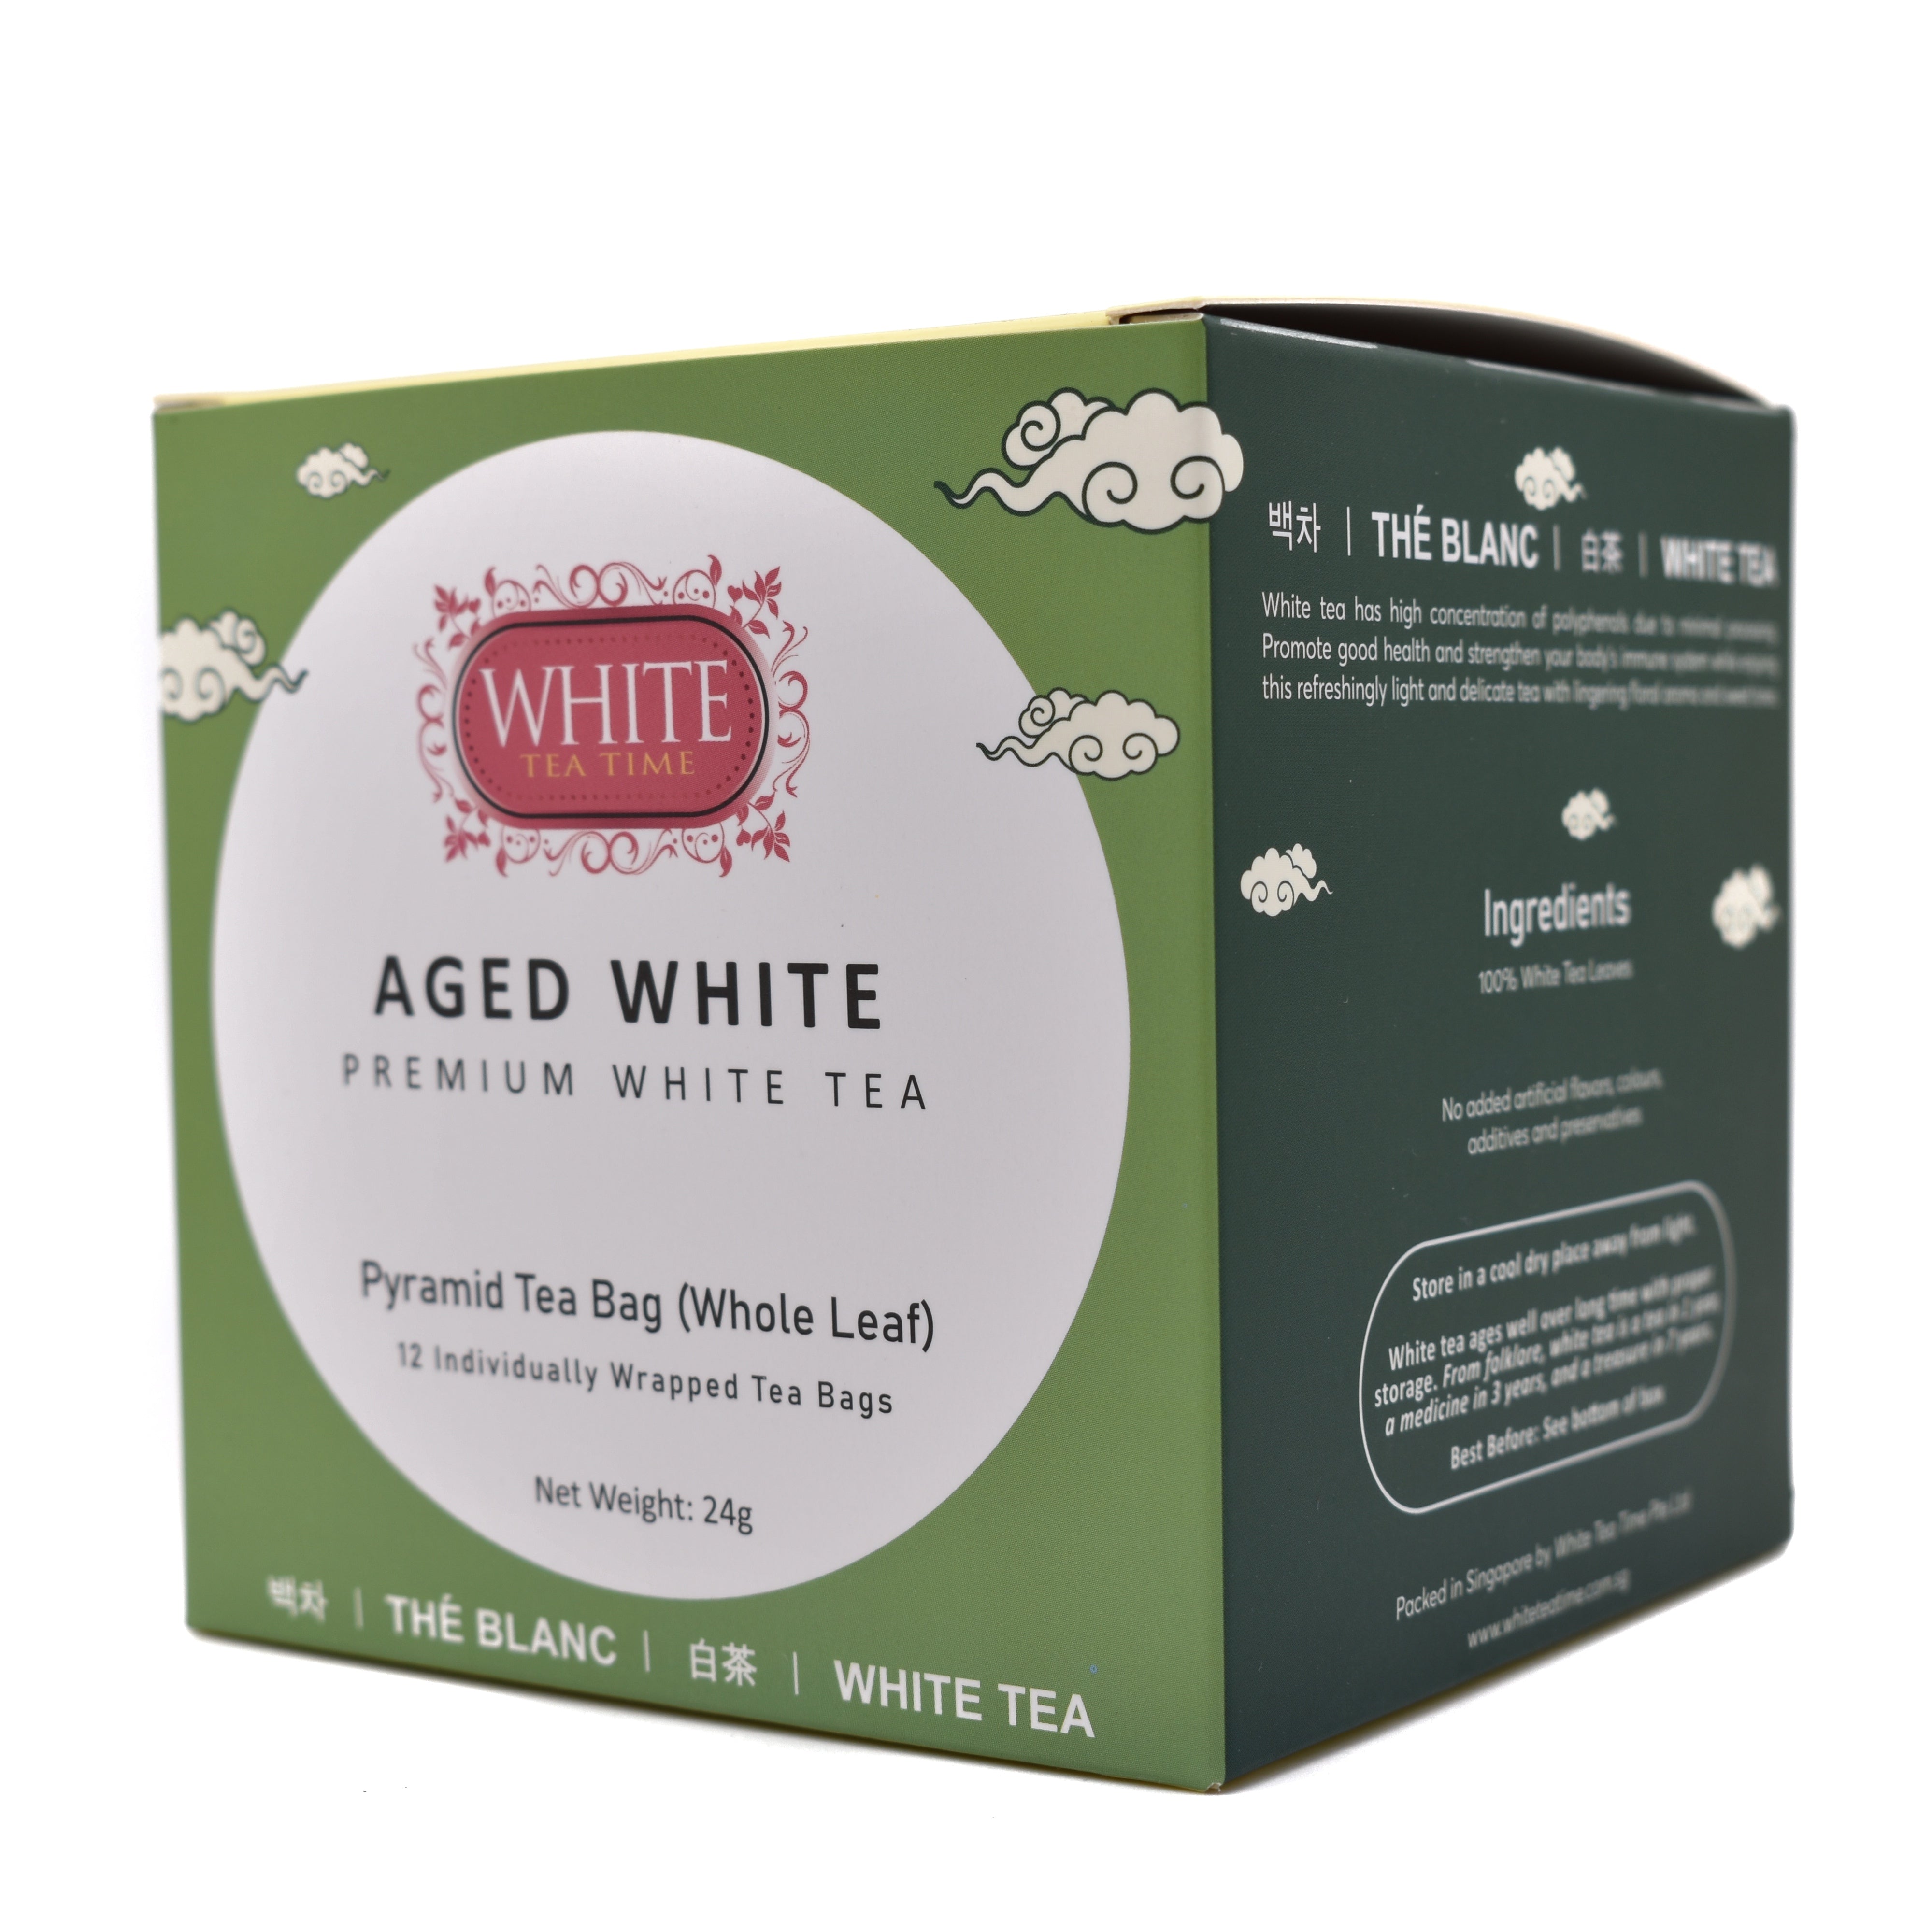 aged white tea bag improves immunity against coronaviruses premium white tea in pyramid bag